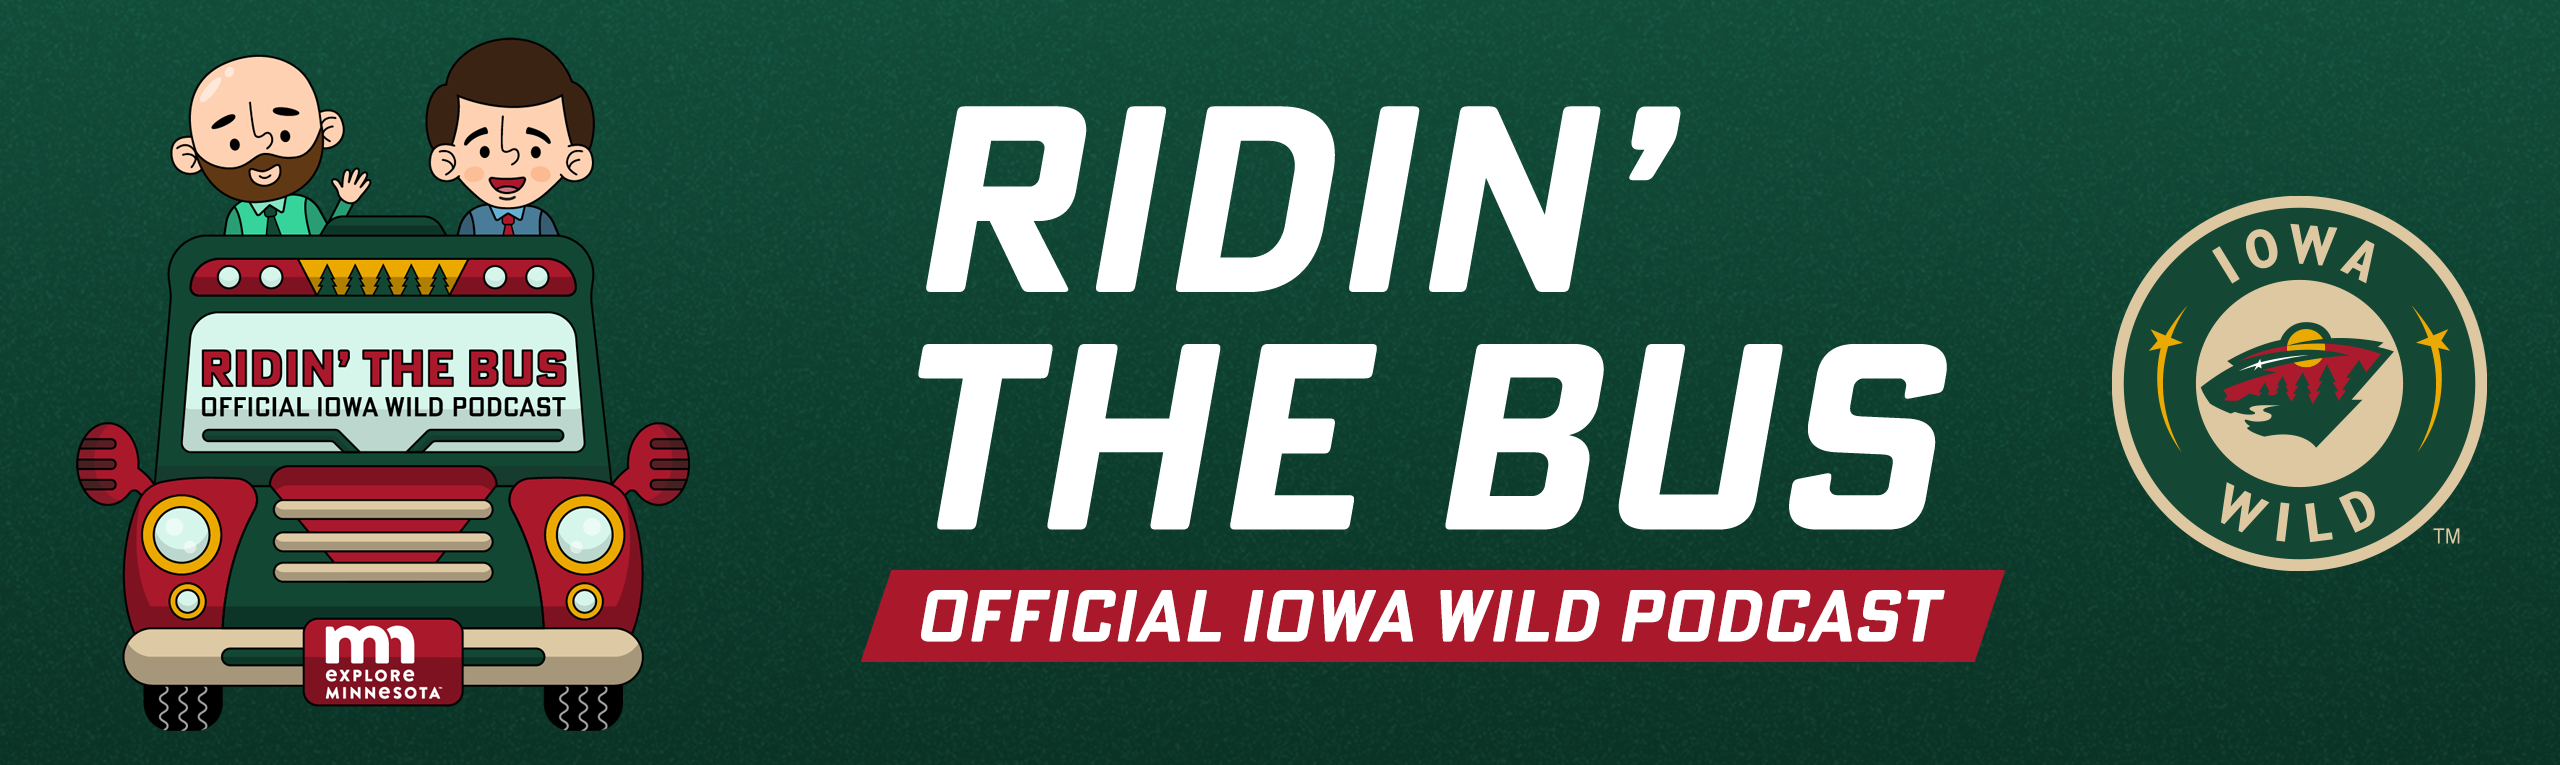 Ridin' The Bus with the Iowa Wild